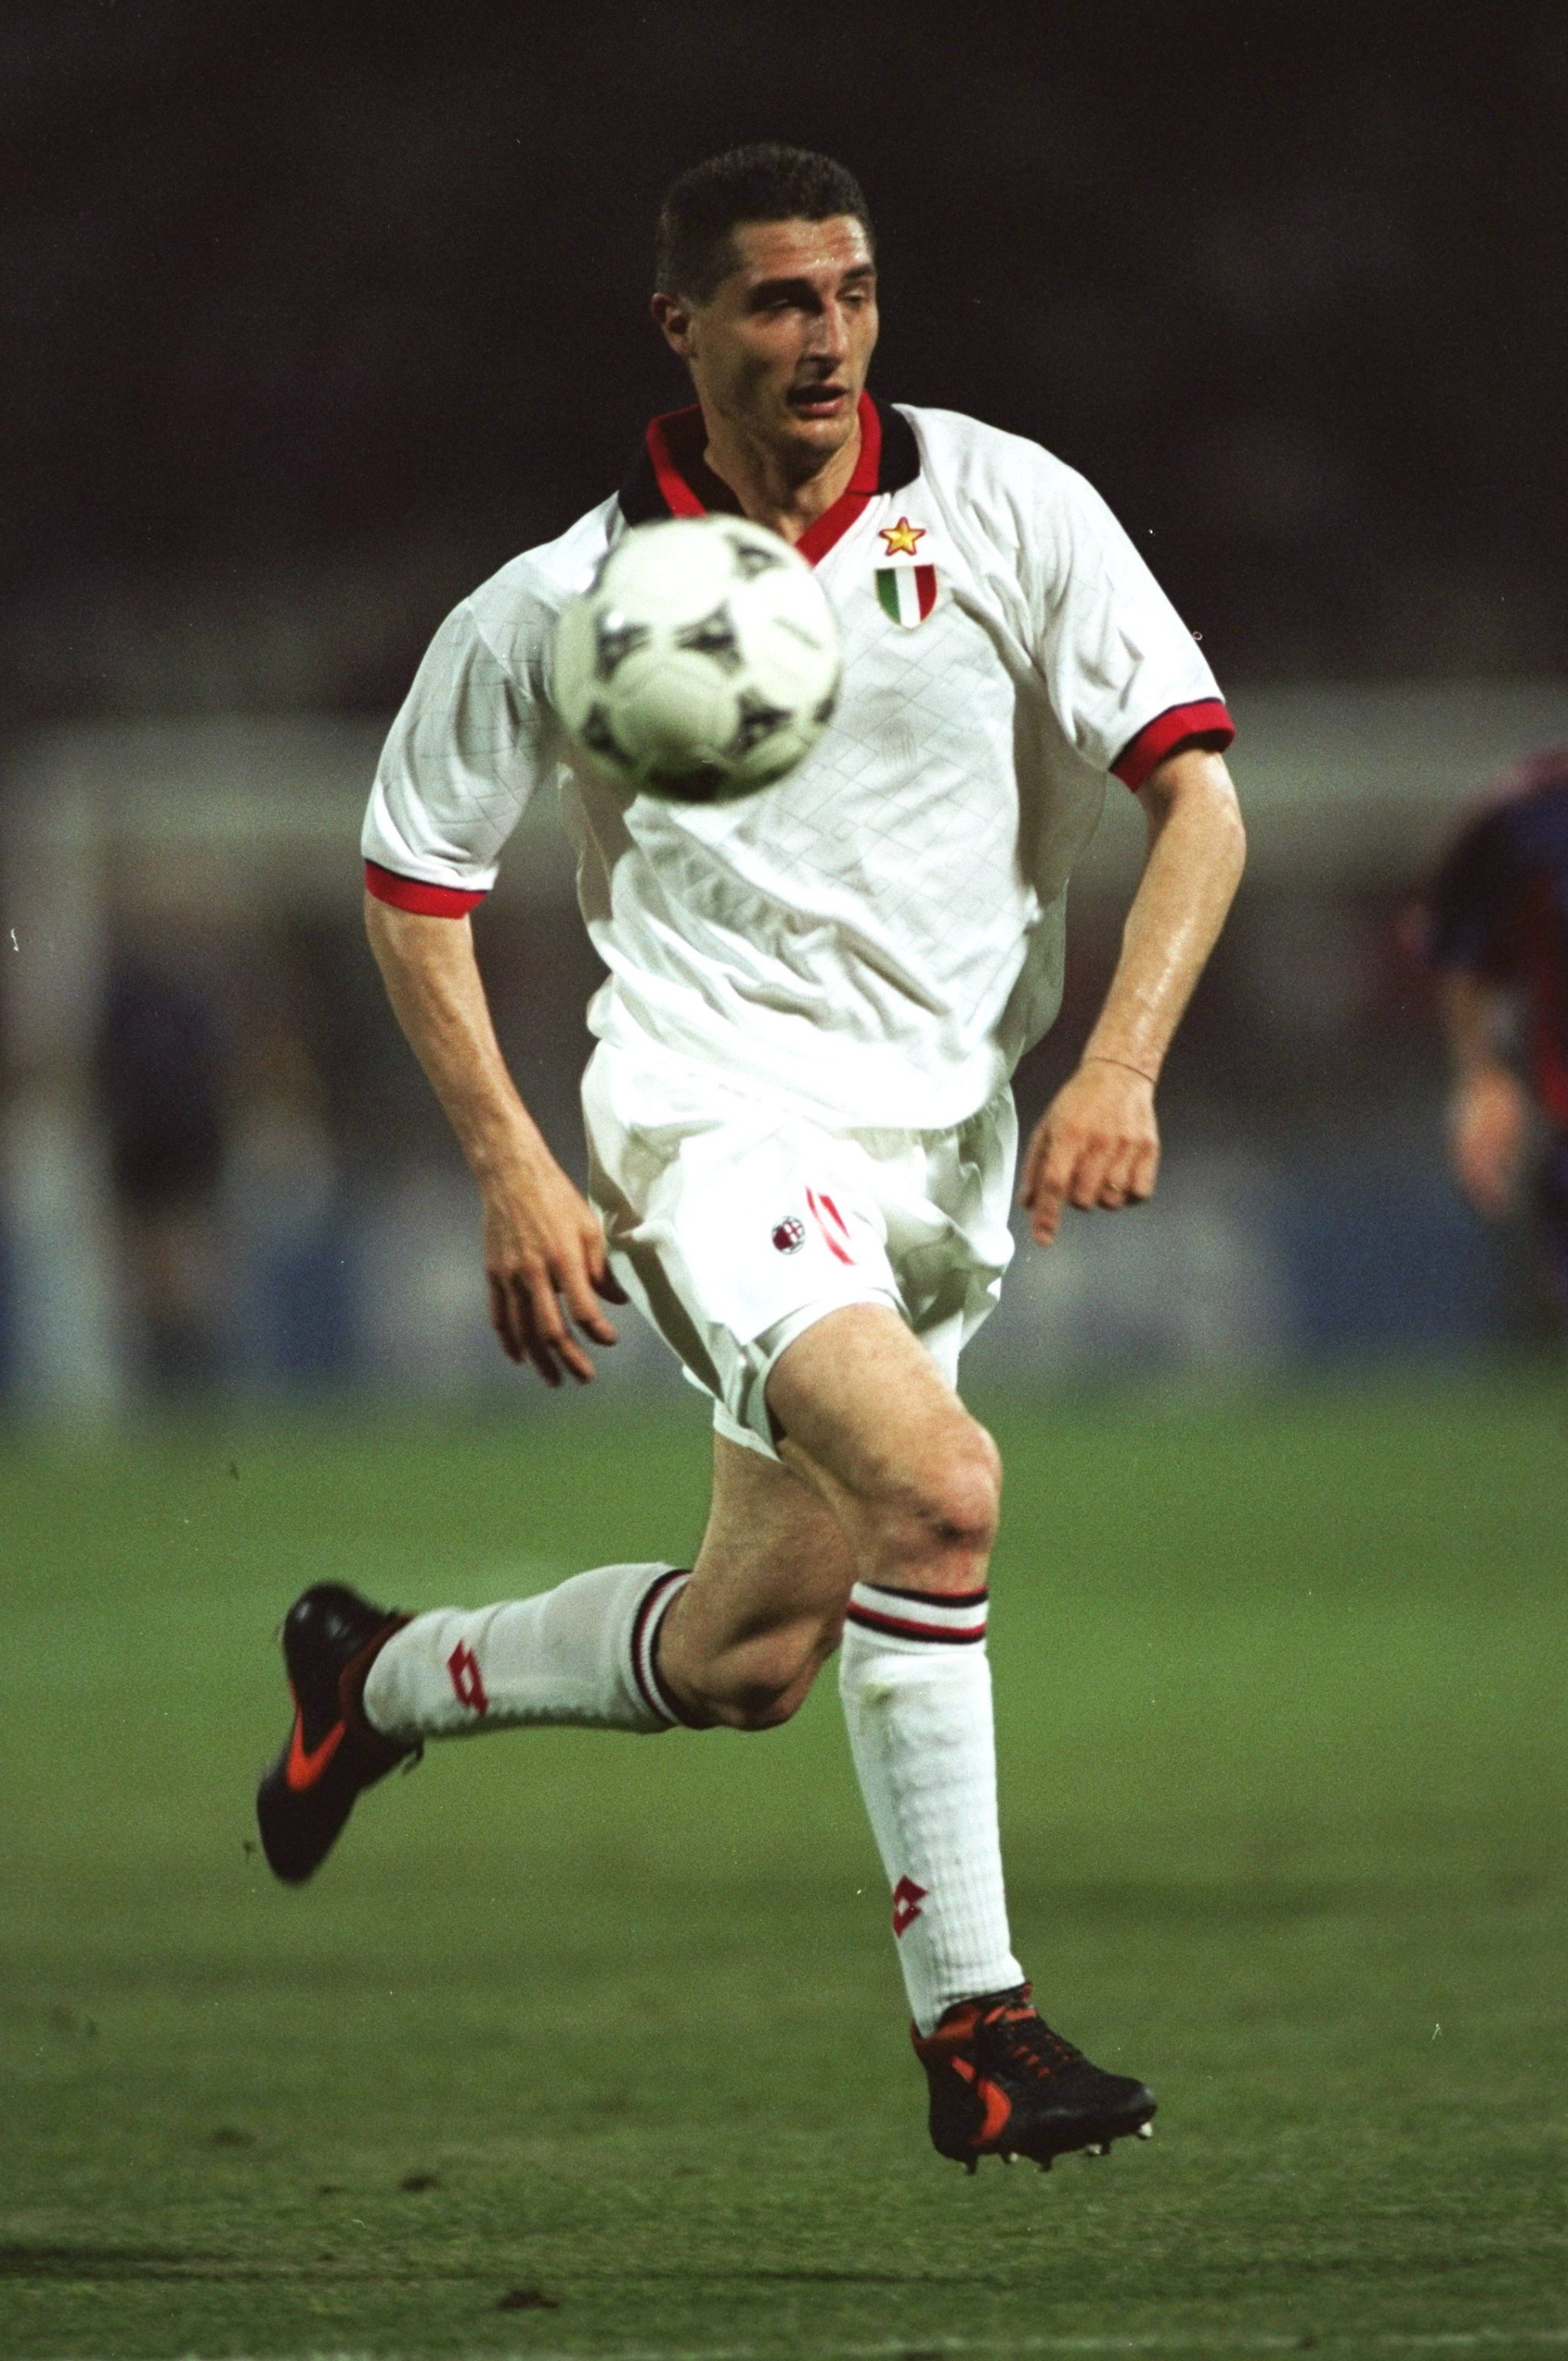 AC Milan's Daniele Massaro